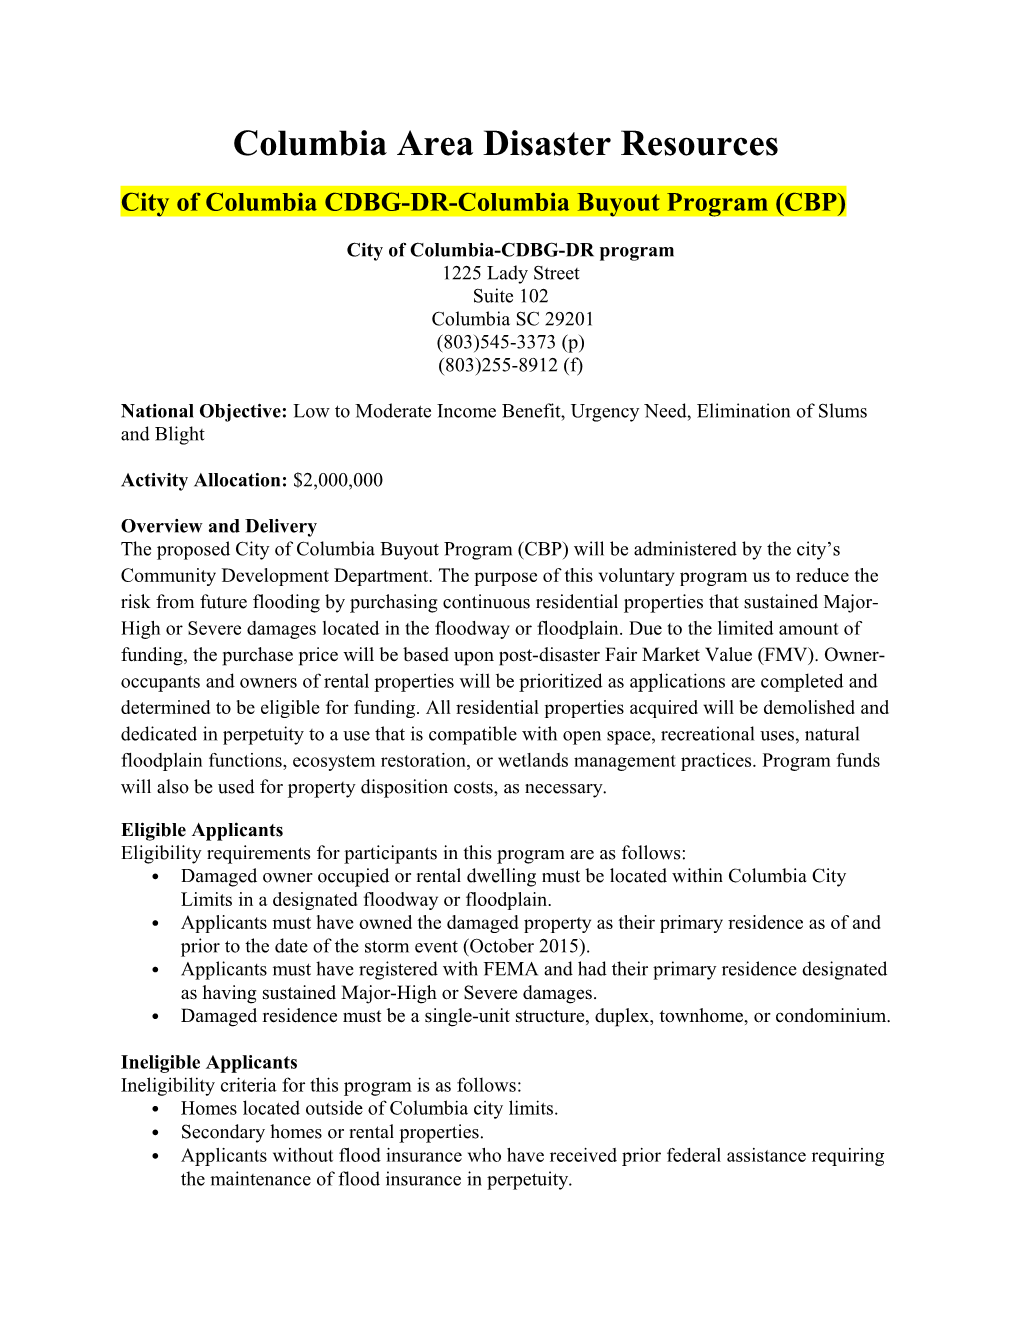 City of Columbia CDBG-DR-Columbia Buyout Program (CBP)